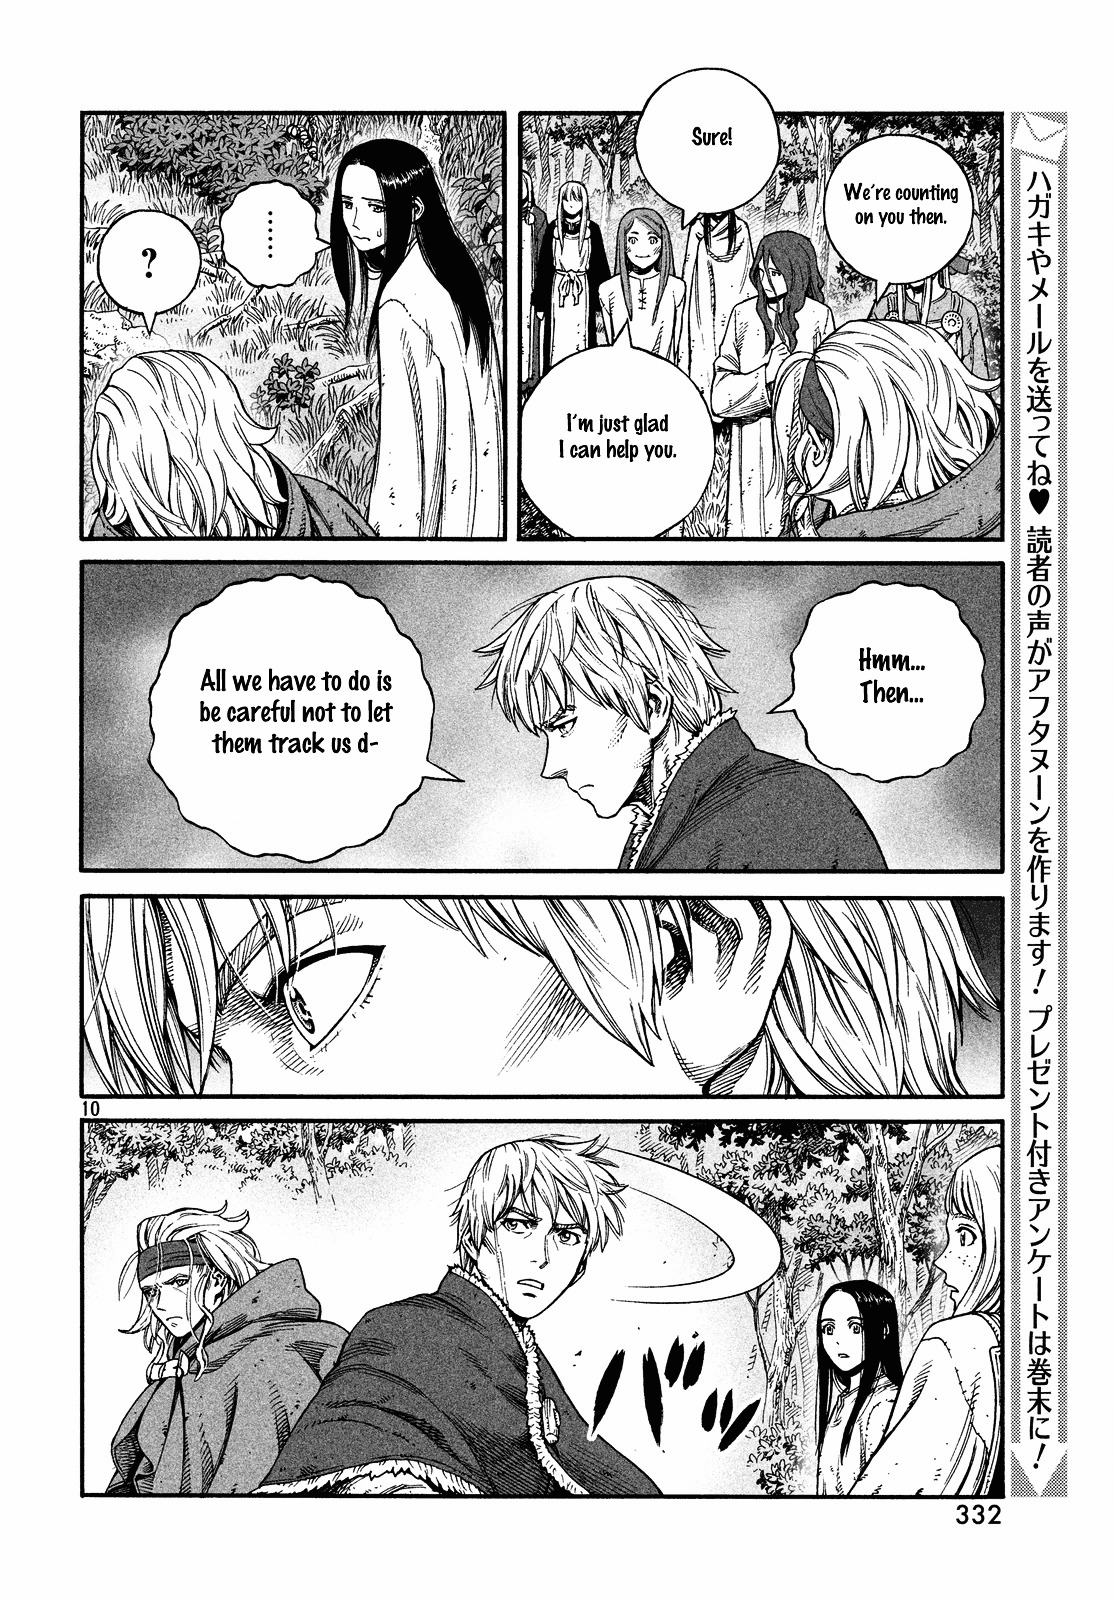 Vinland Saga Manga Manga Chapter - 134 - image 11